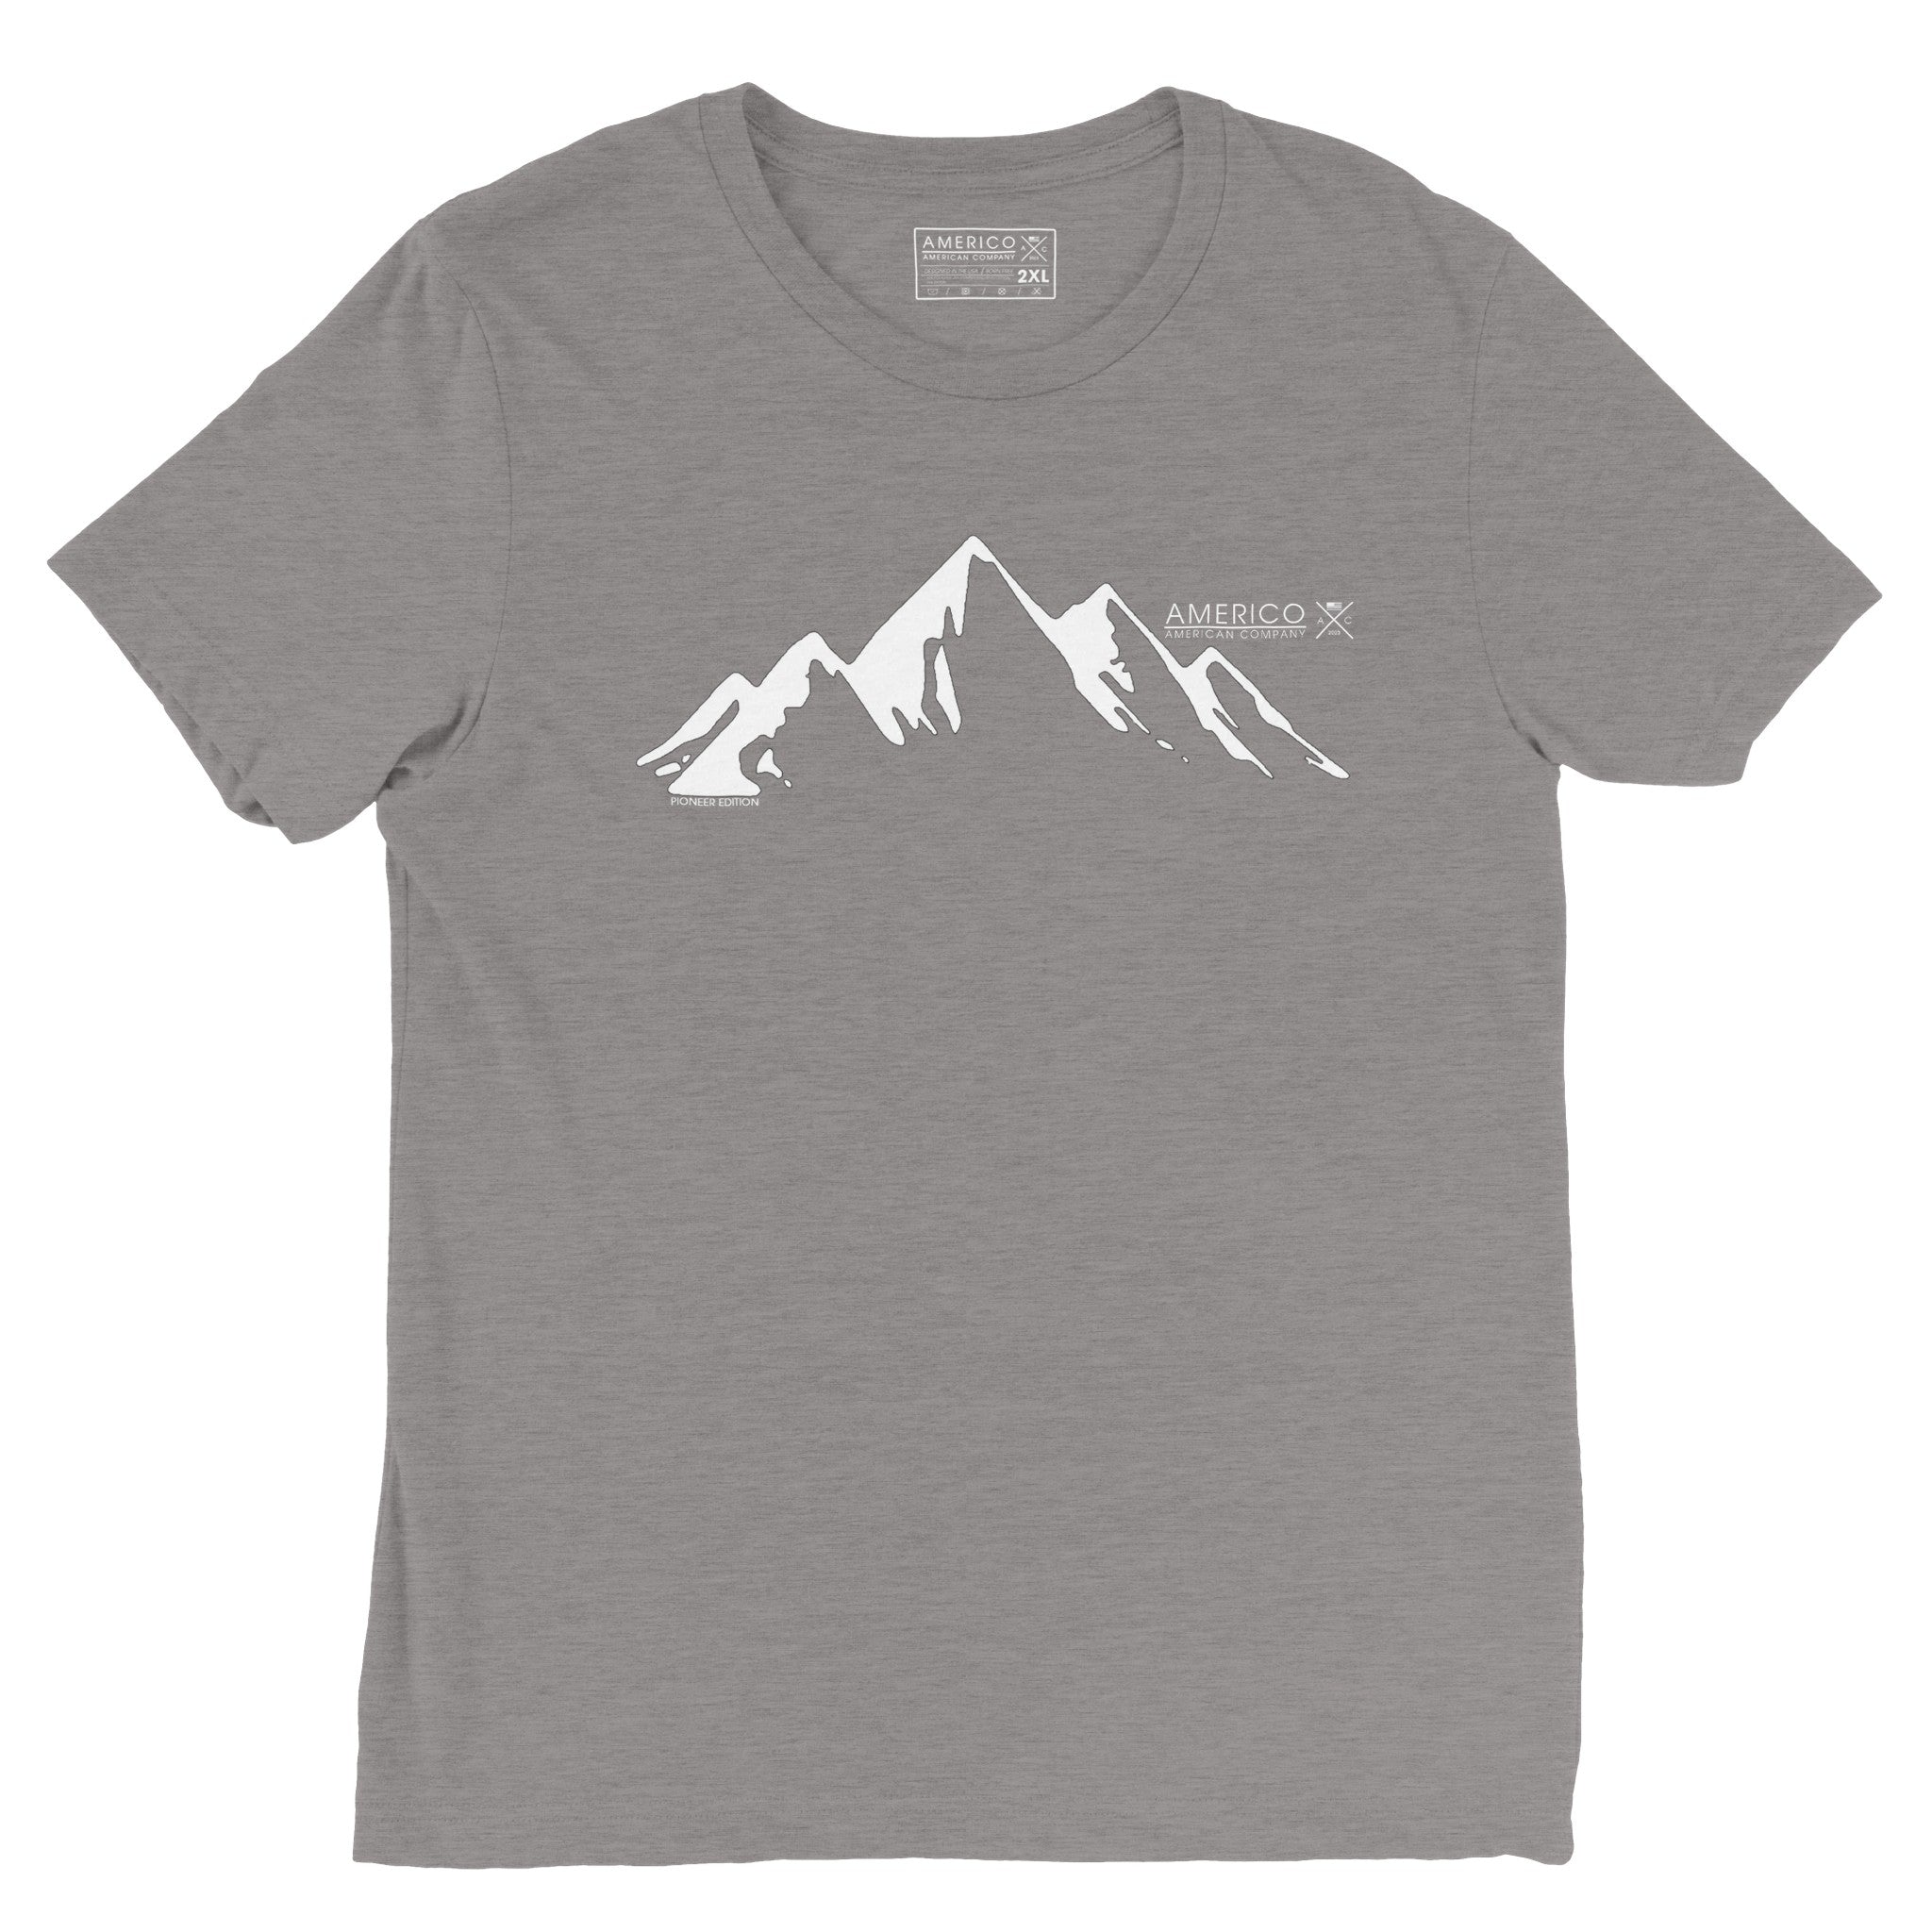 AC "PIONEER EDITION" TRI-Blend T-Shirt